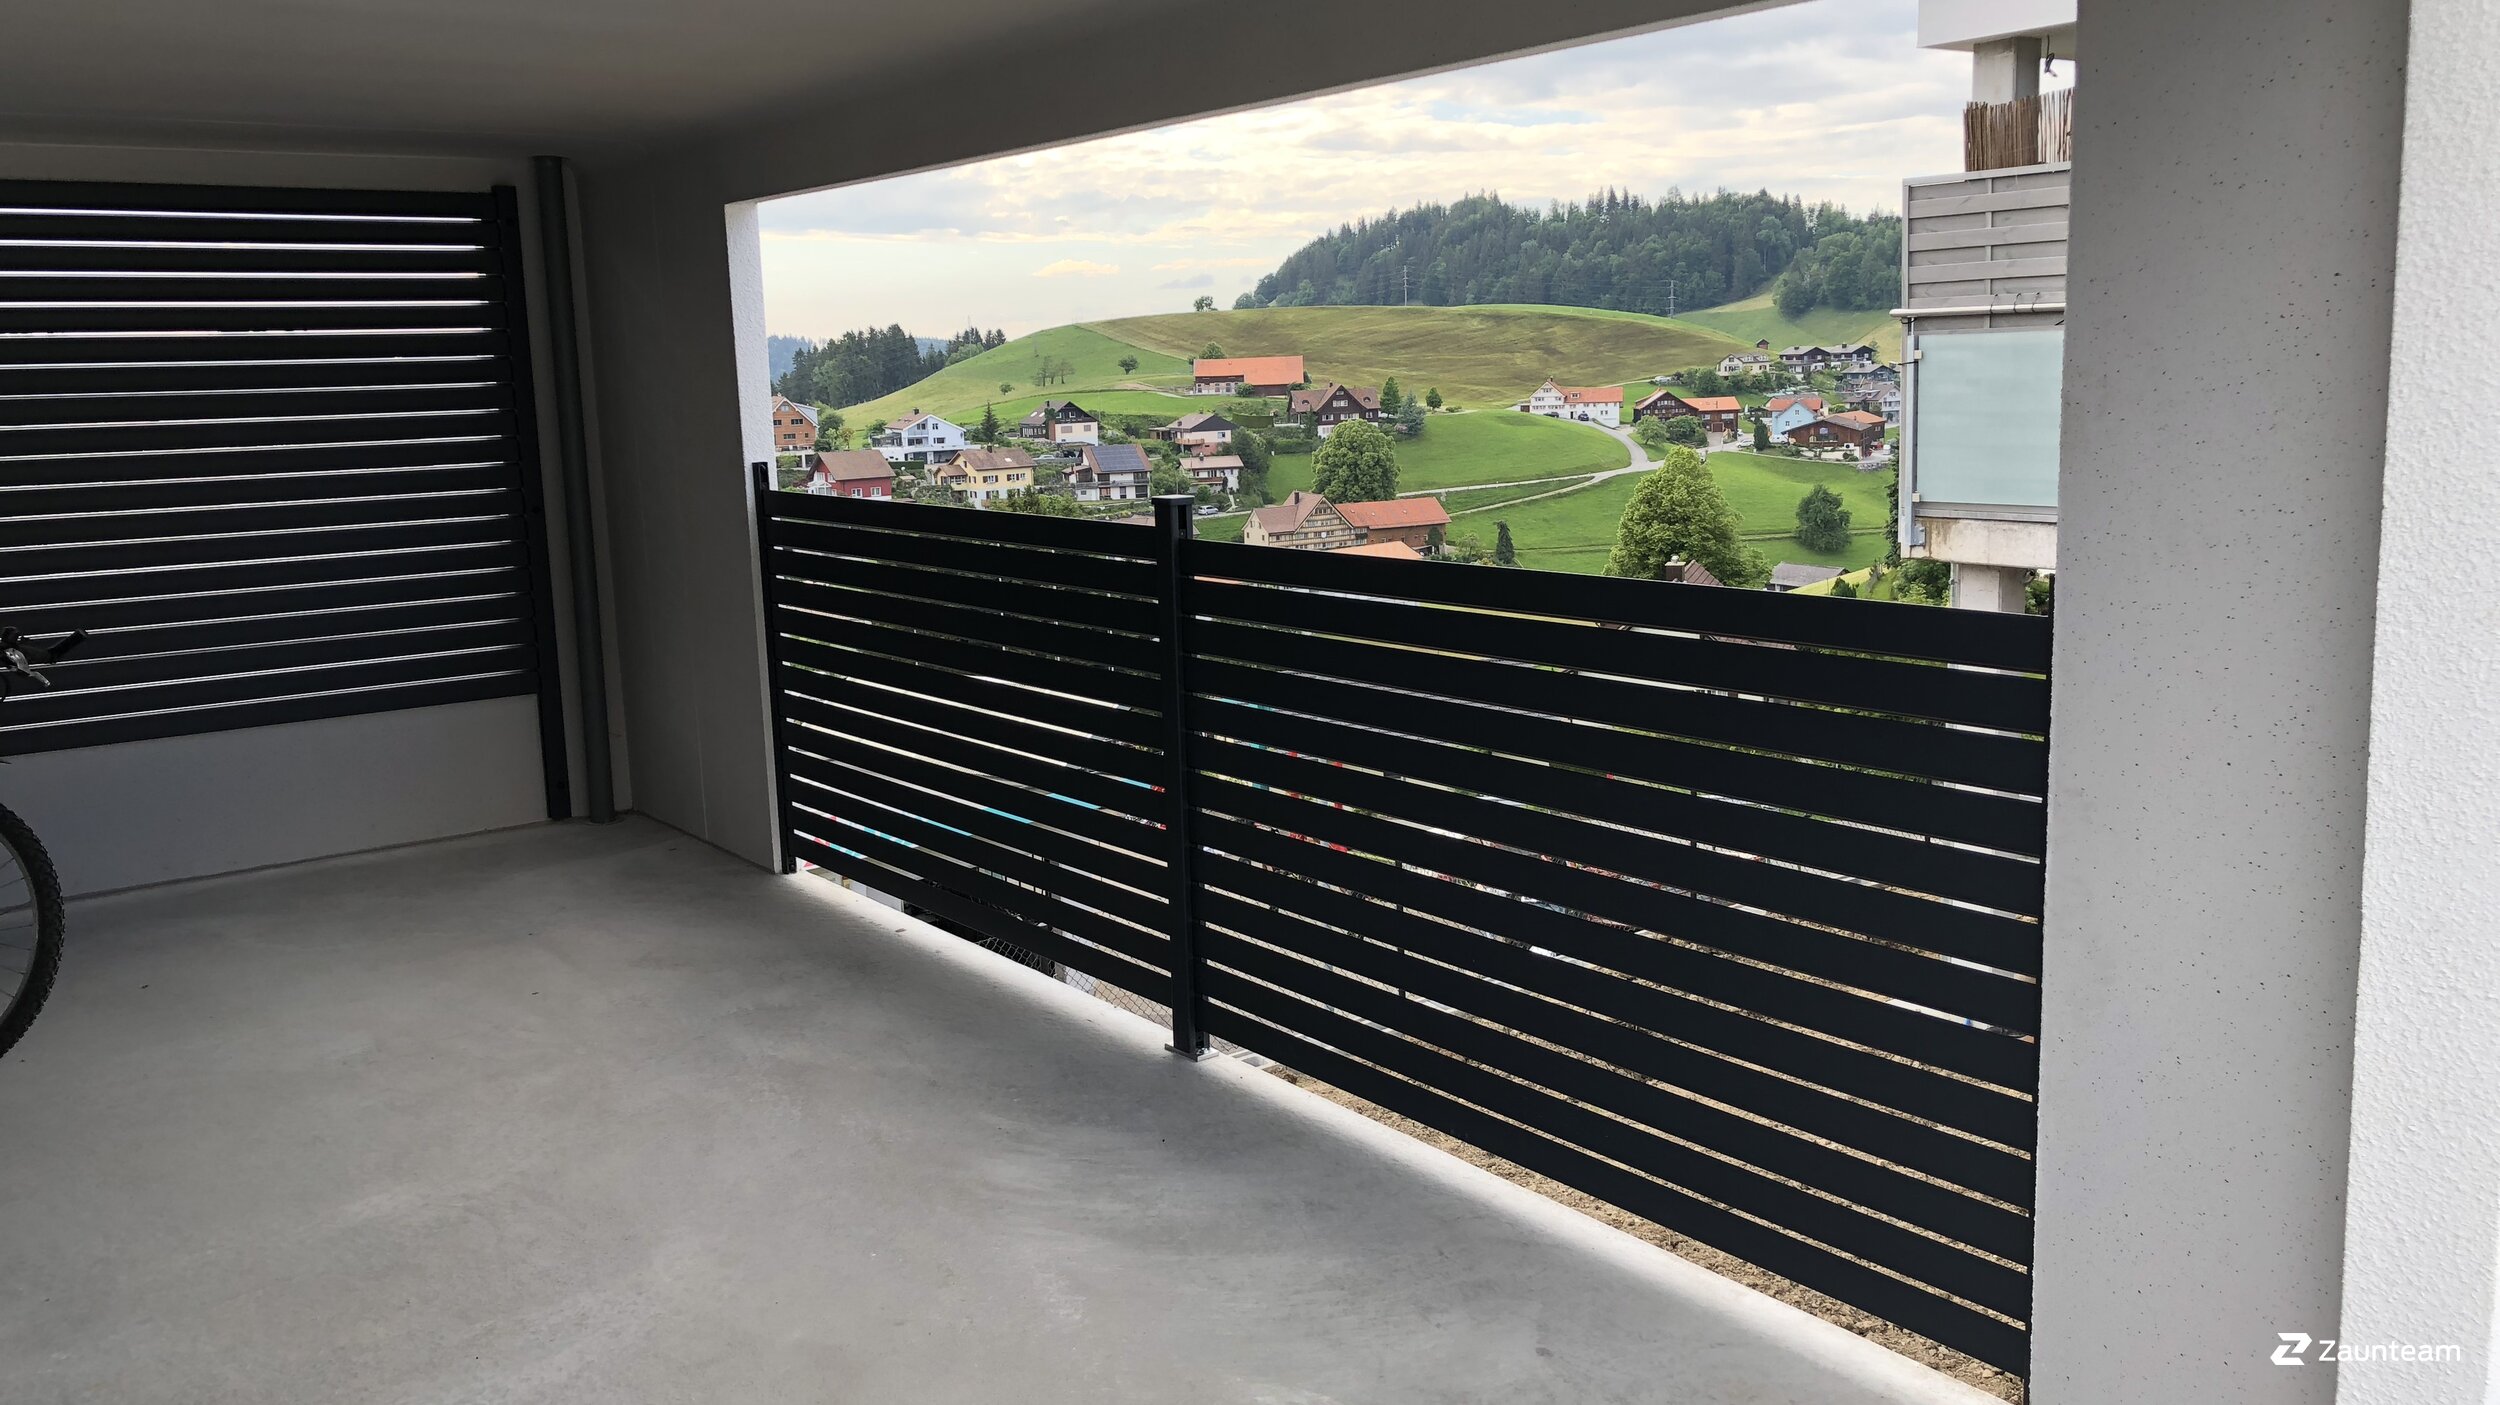 Protection brise-vue en aluminium de 2018 à 9103 Schwellbrunn Suisse de Zaunteam Appenzellerland.